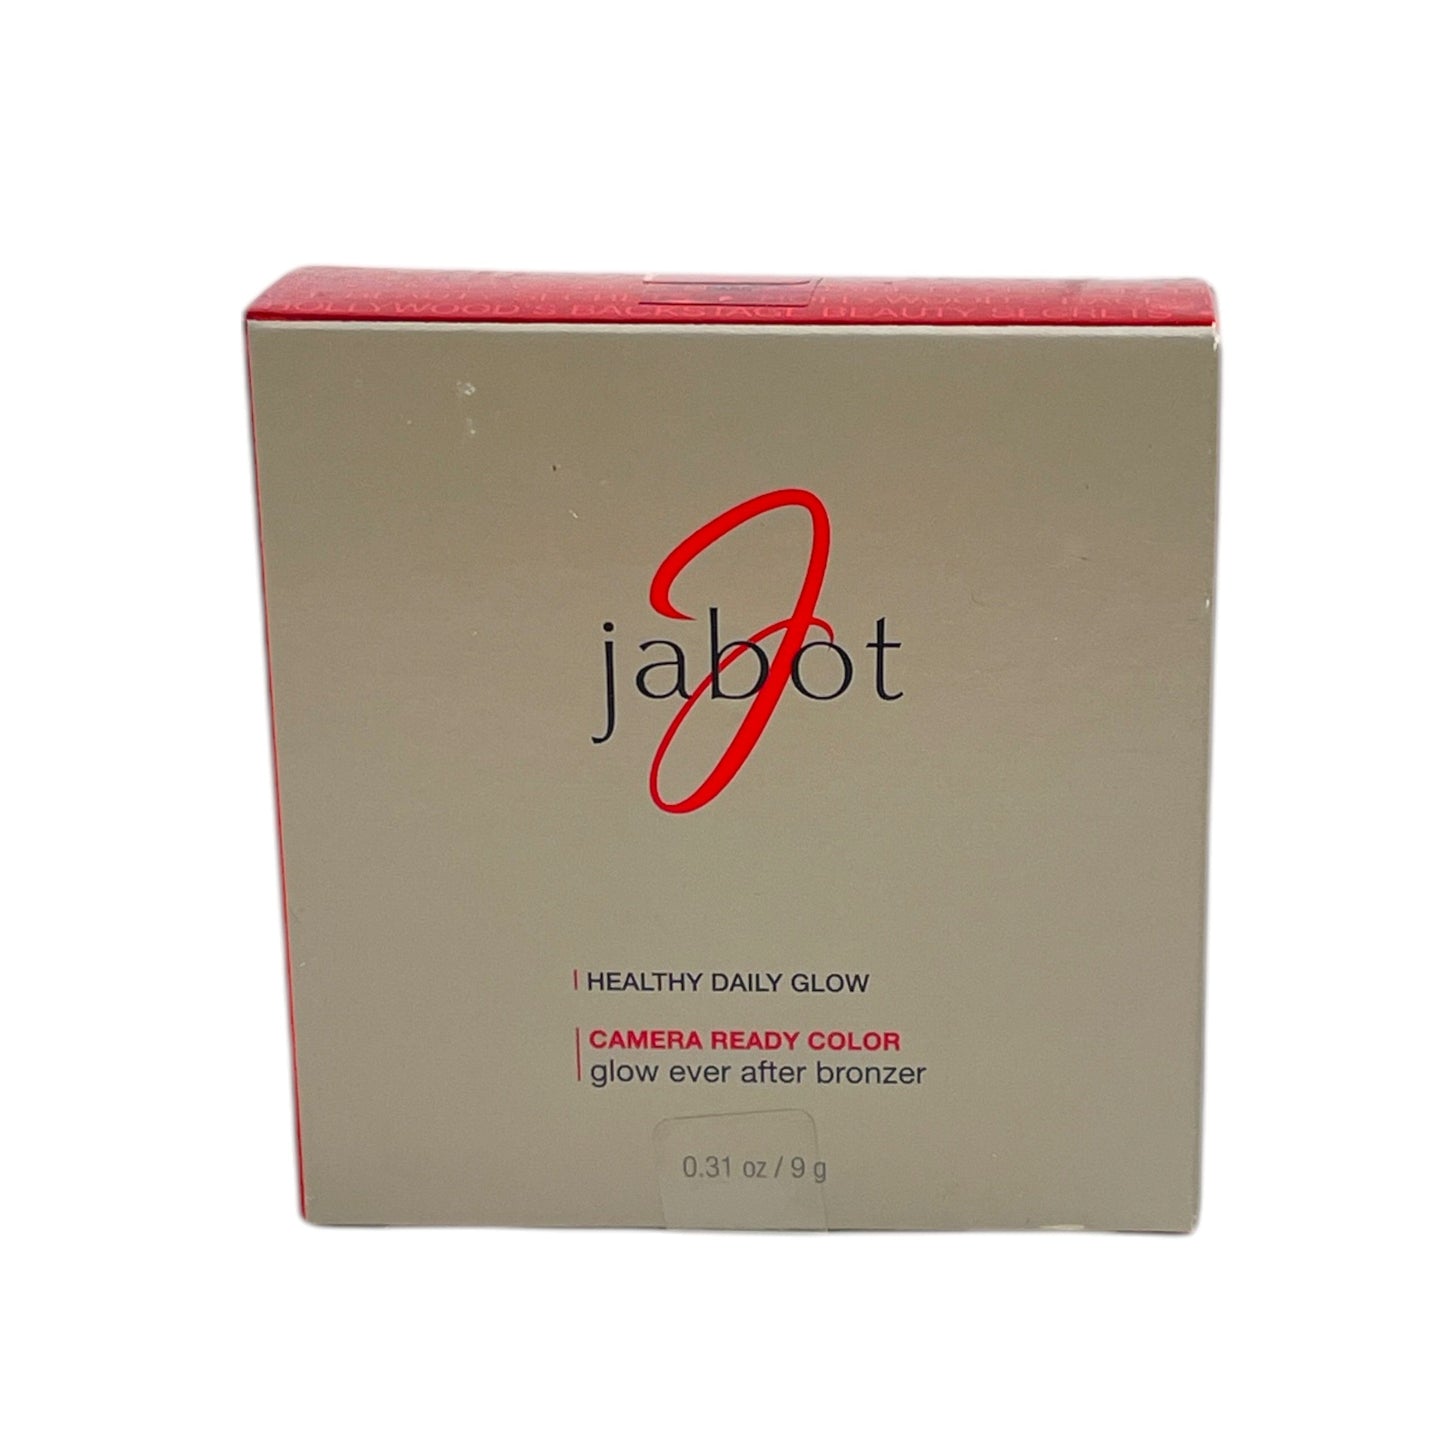 Jabot Healthy Daily Glow  Camera Ready Color Copper Kiss Dark (0.31oz / 9g)